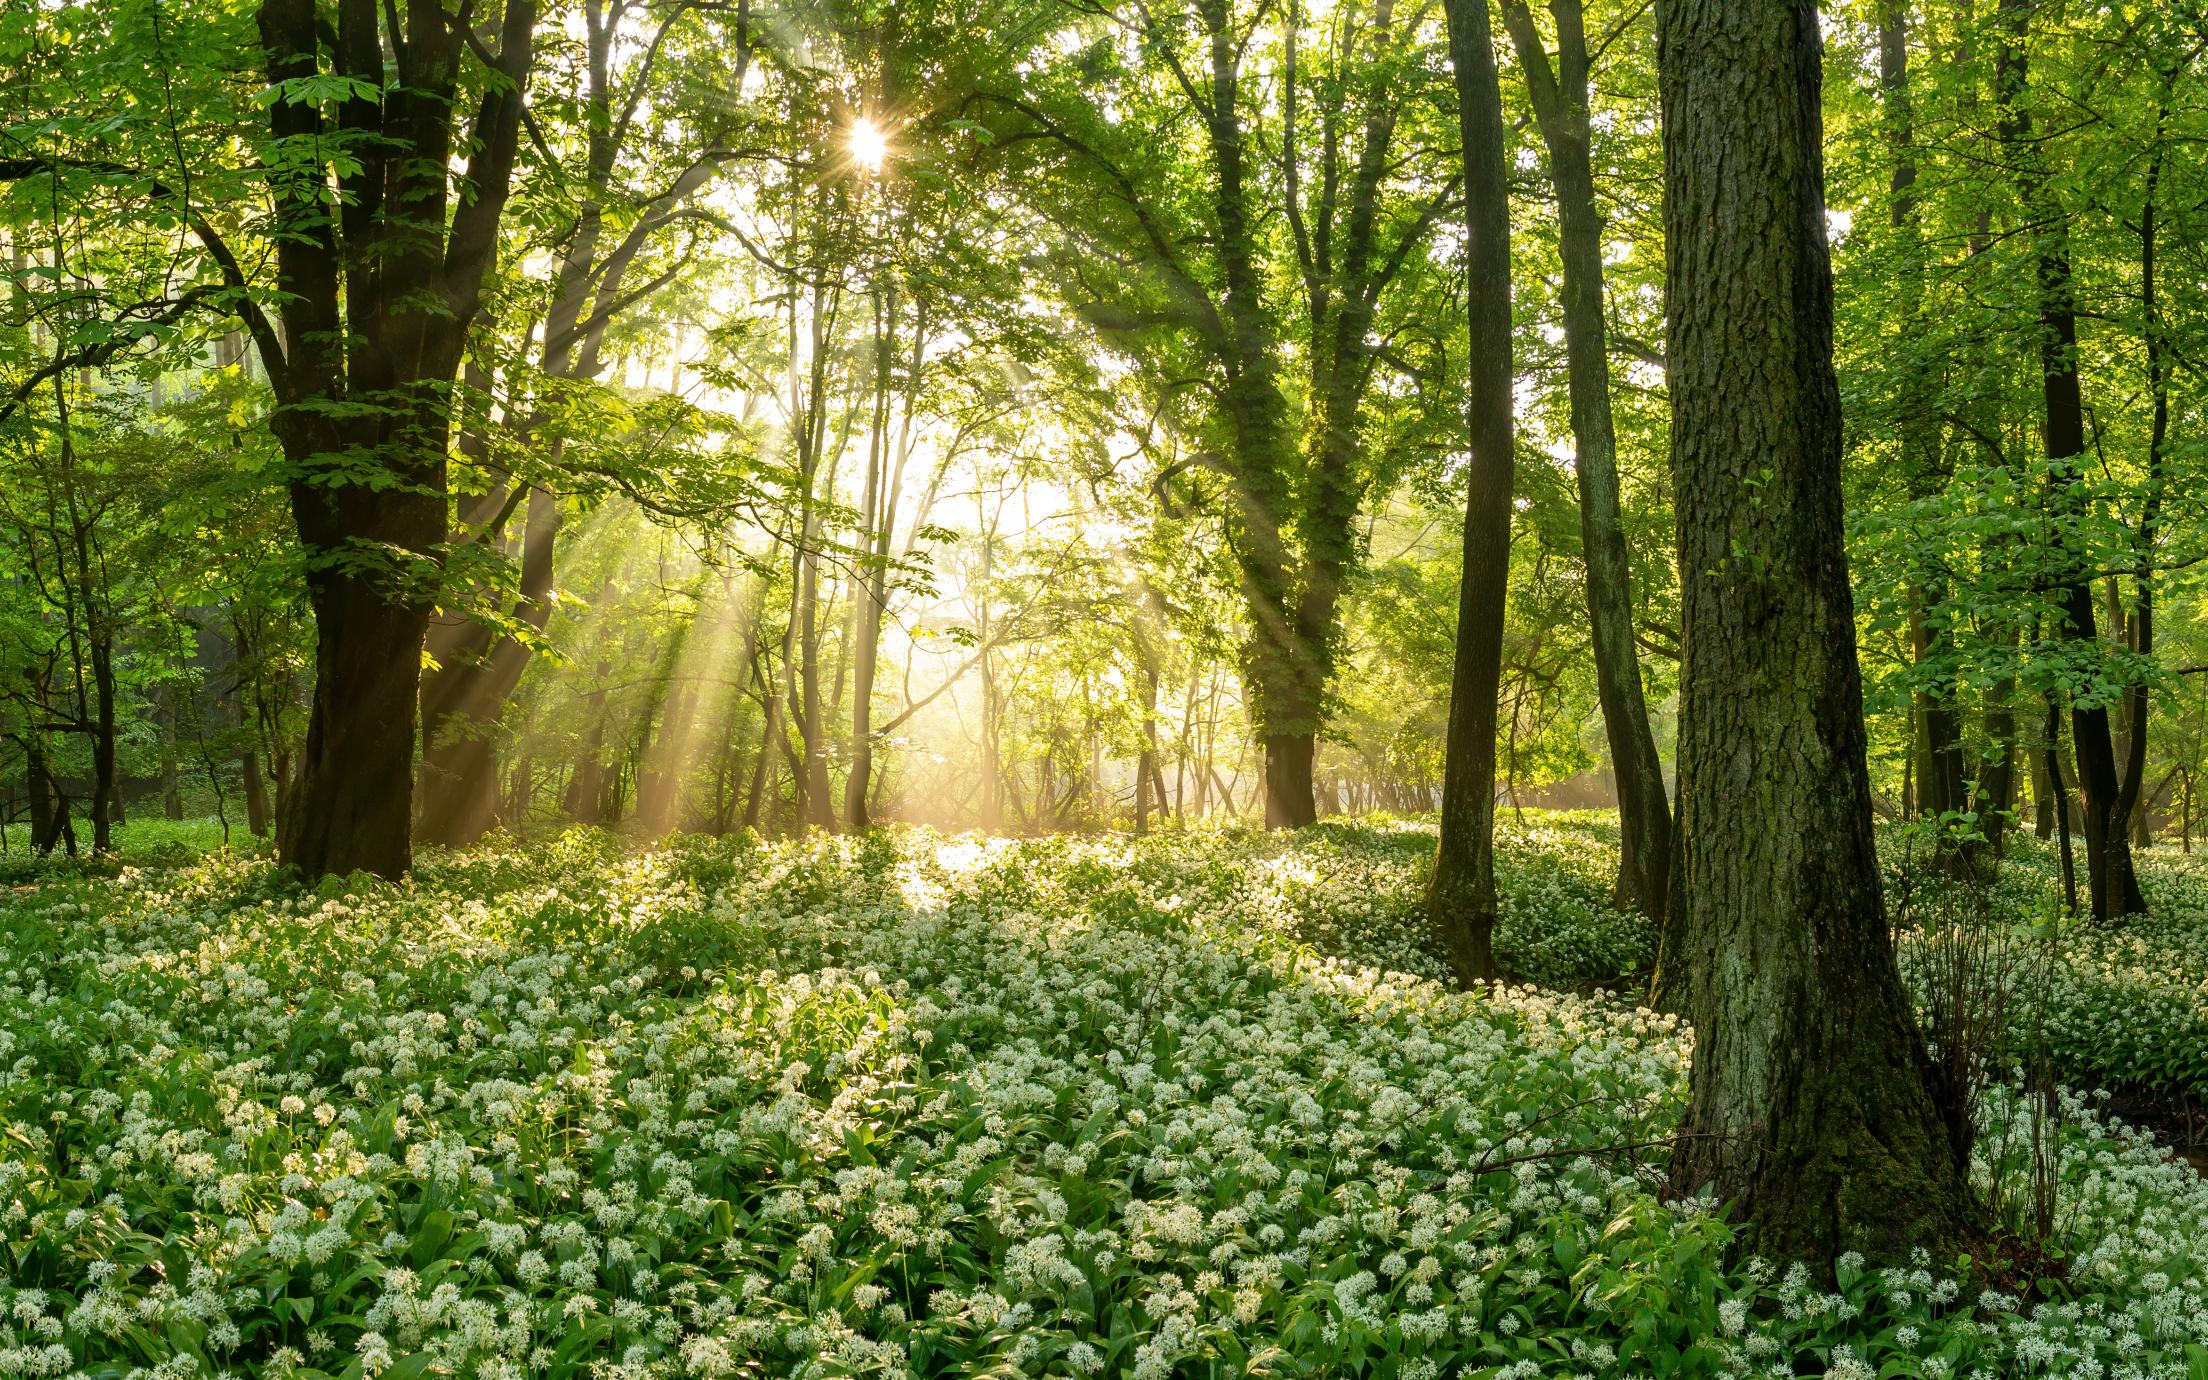 a serene forest with dappled sunlight.